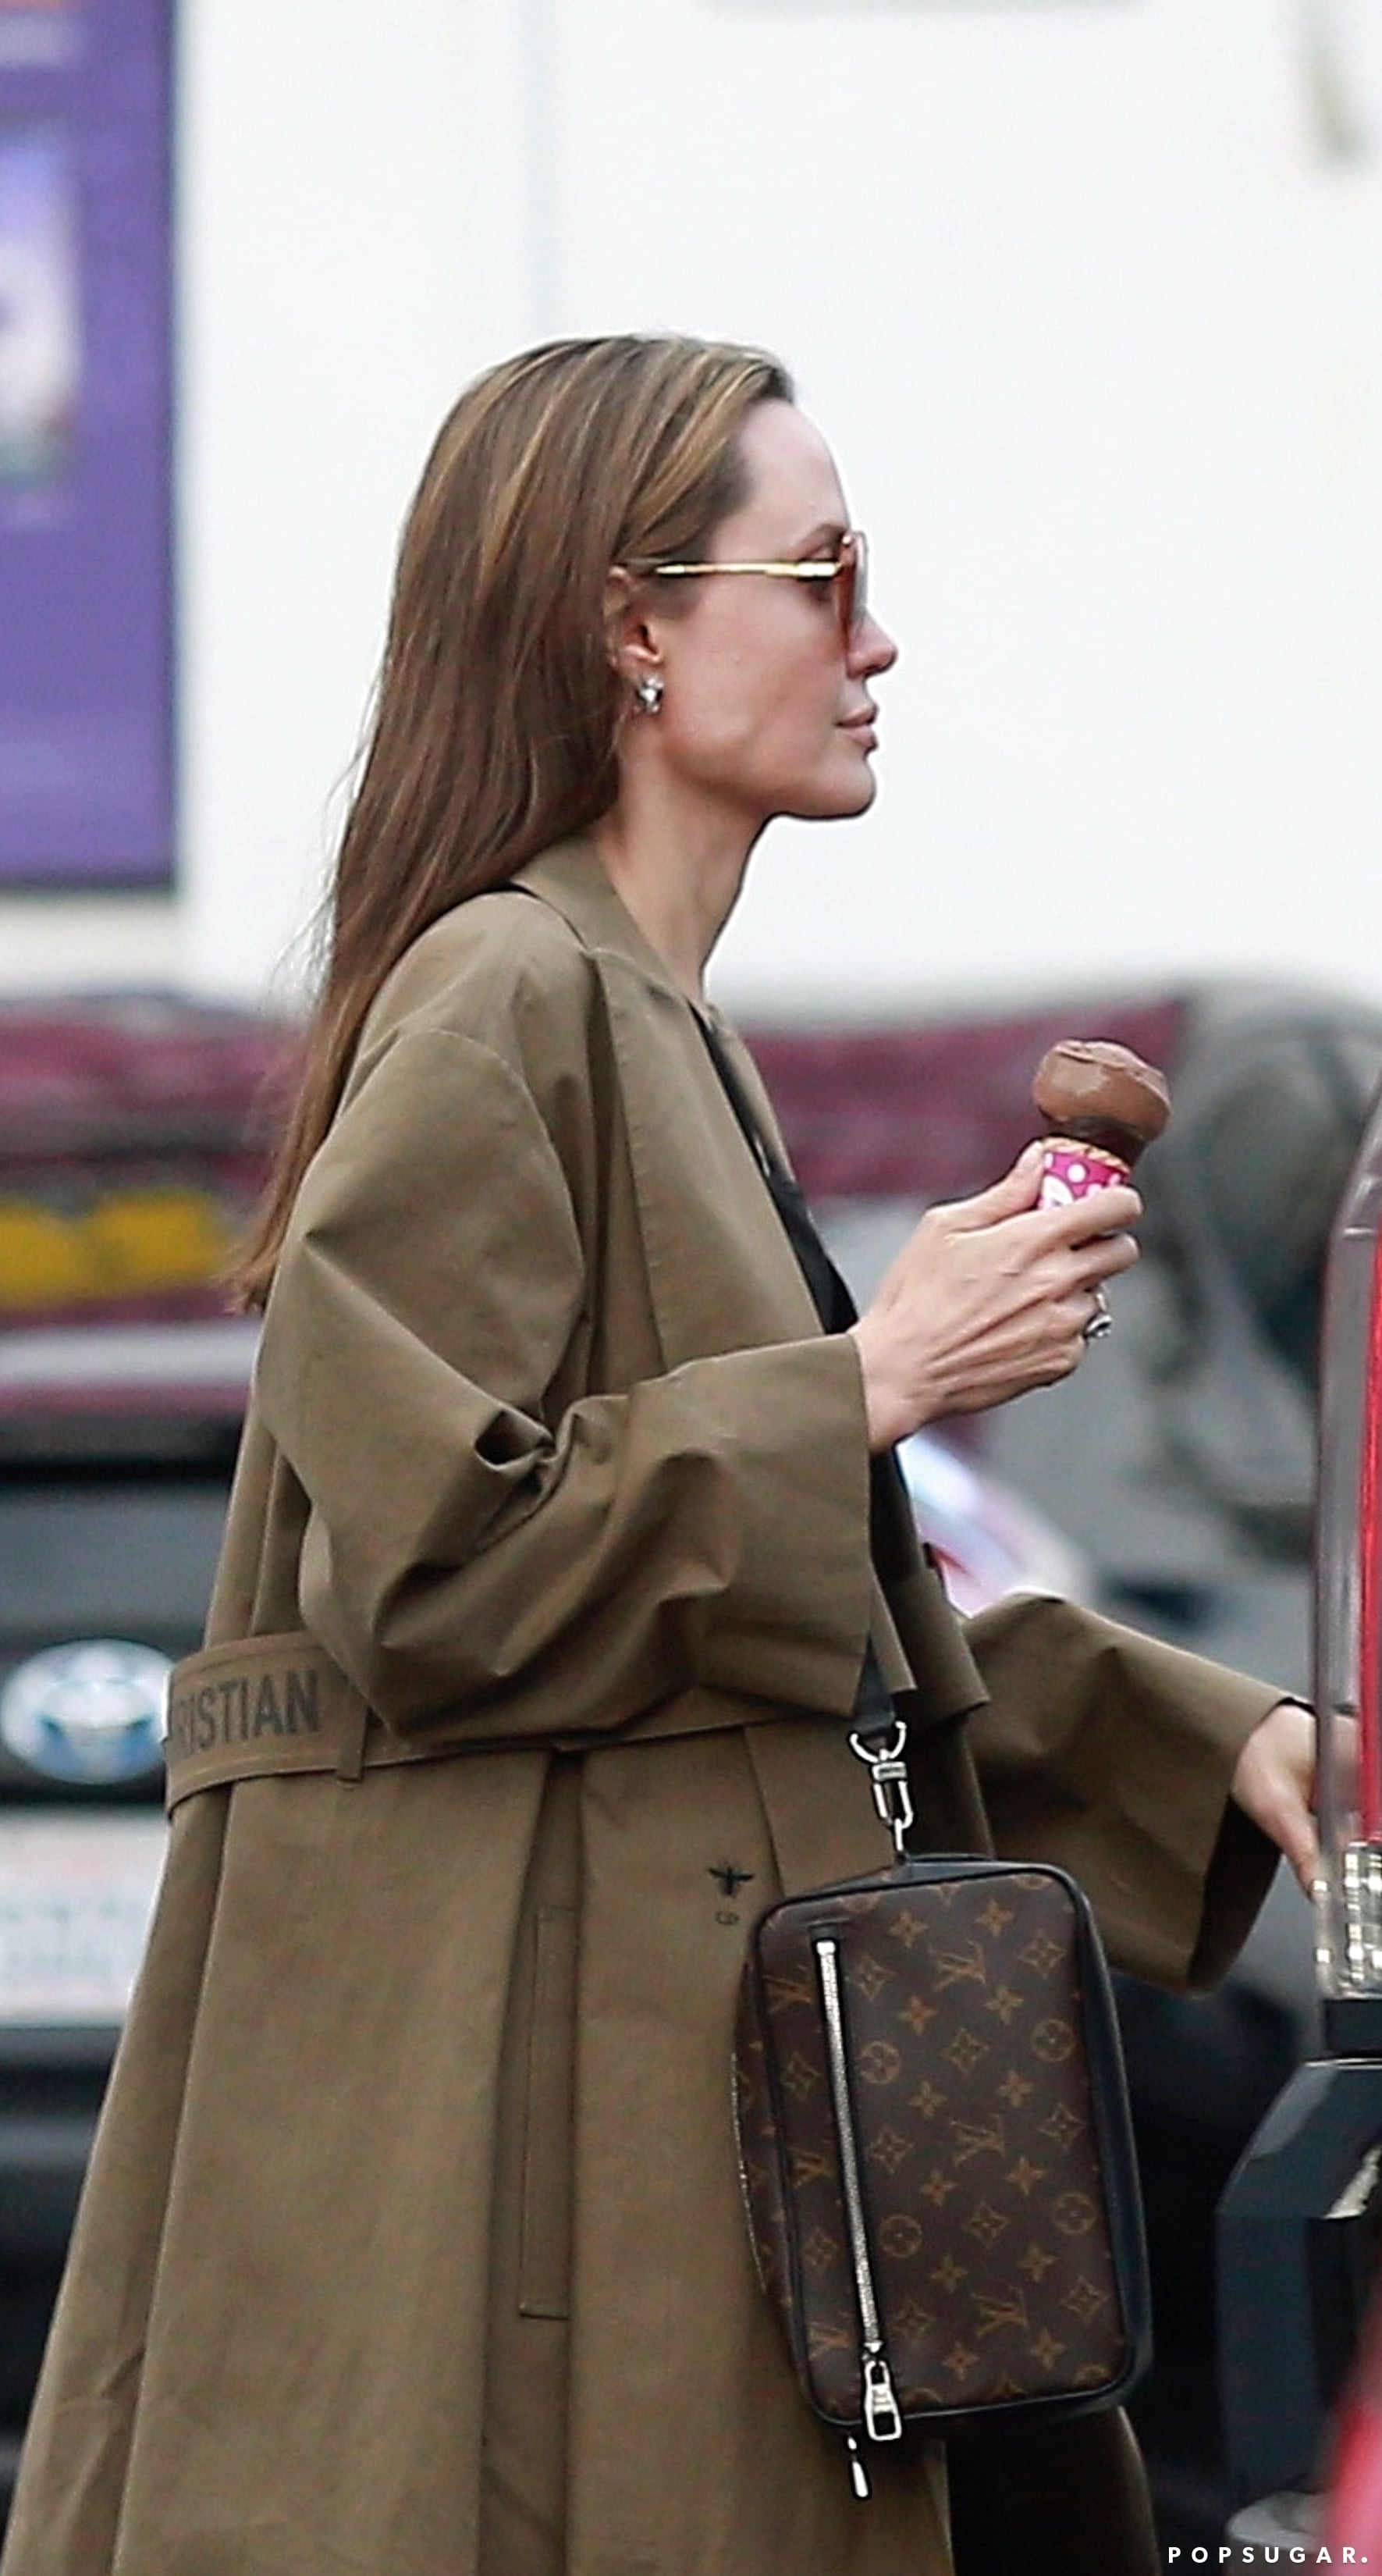 Help identifying Louis Vuitton handbag Angelina Jolie is carrying? Thanks!!  : r/handbags